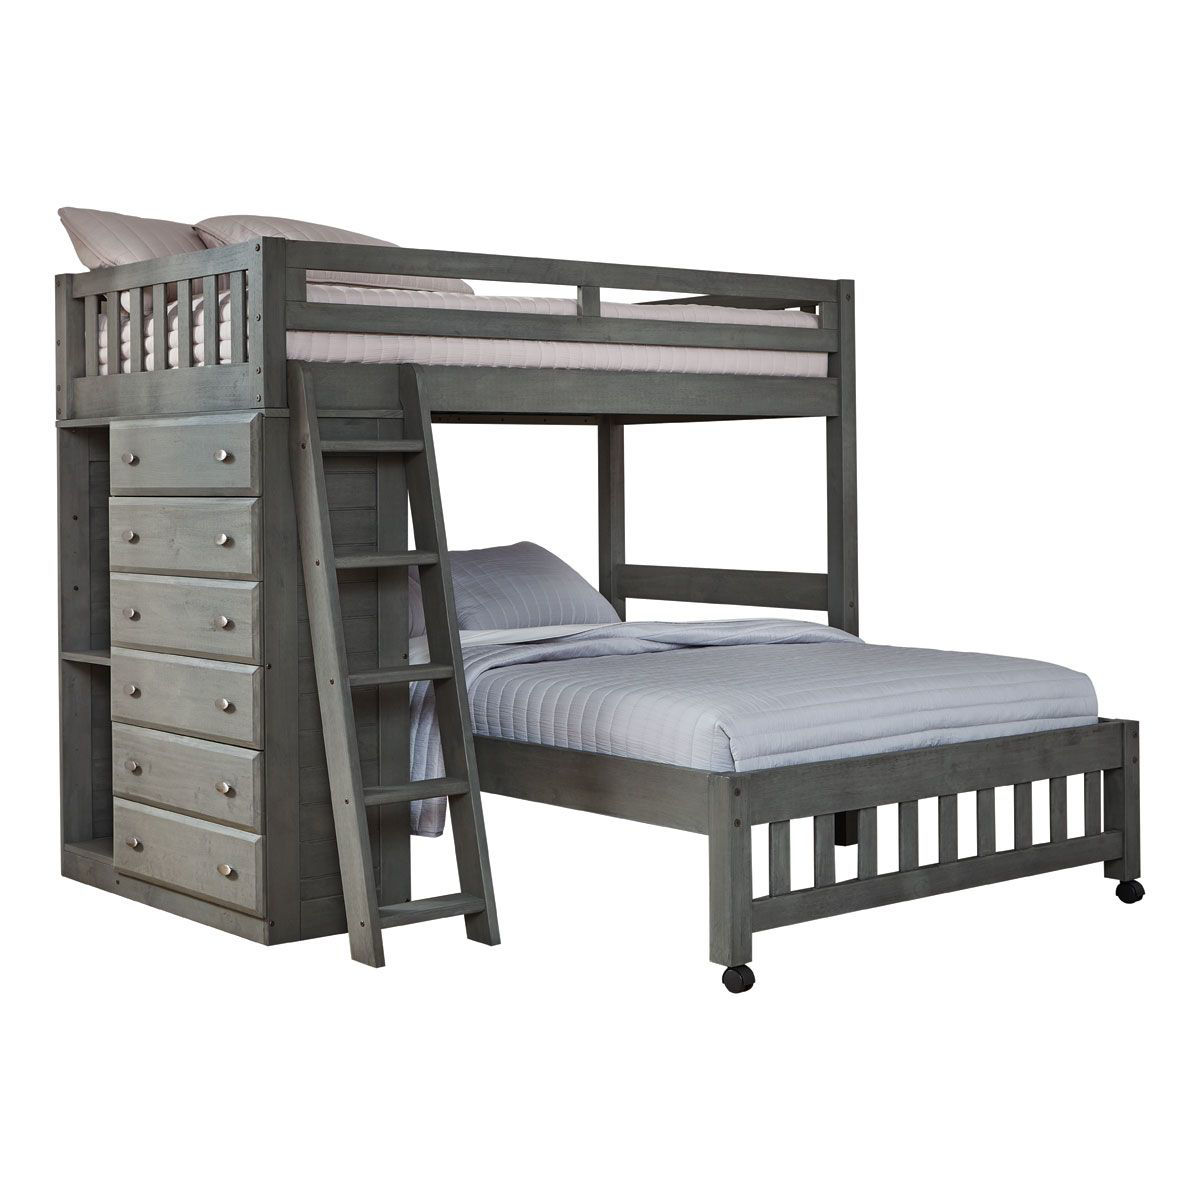 LOFT Lifestyle adjustable twin xl bed